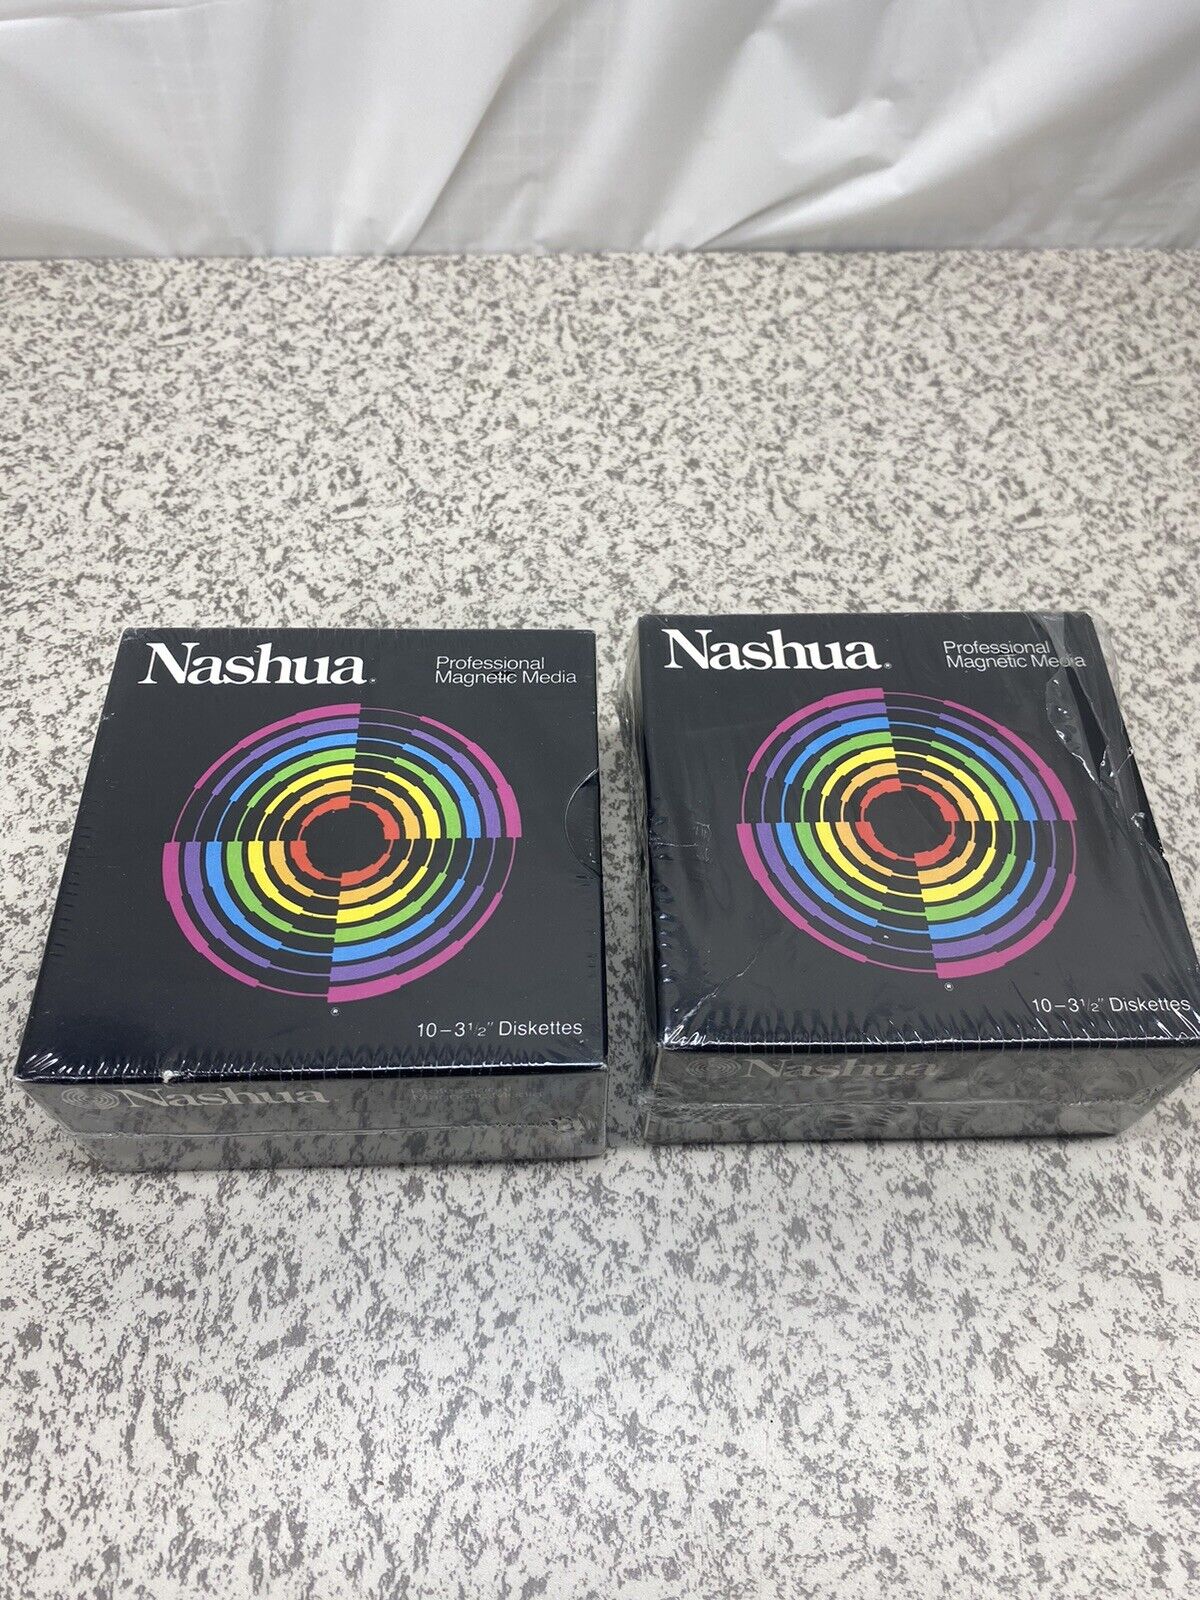 Nashua Professional Magnetic Media 3.5” Diskettes 2-10 Counts Vintage